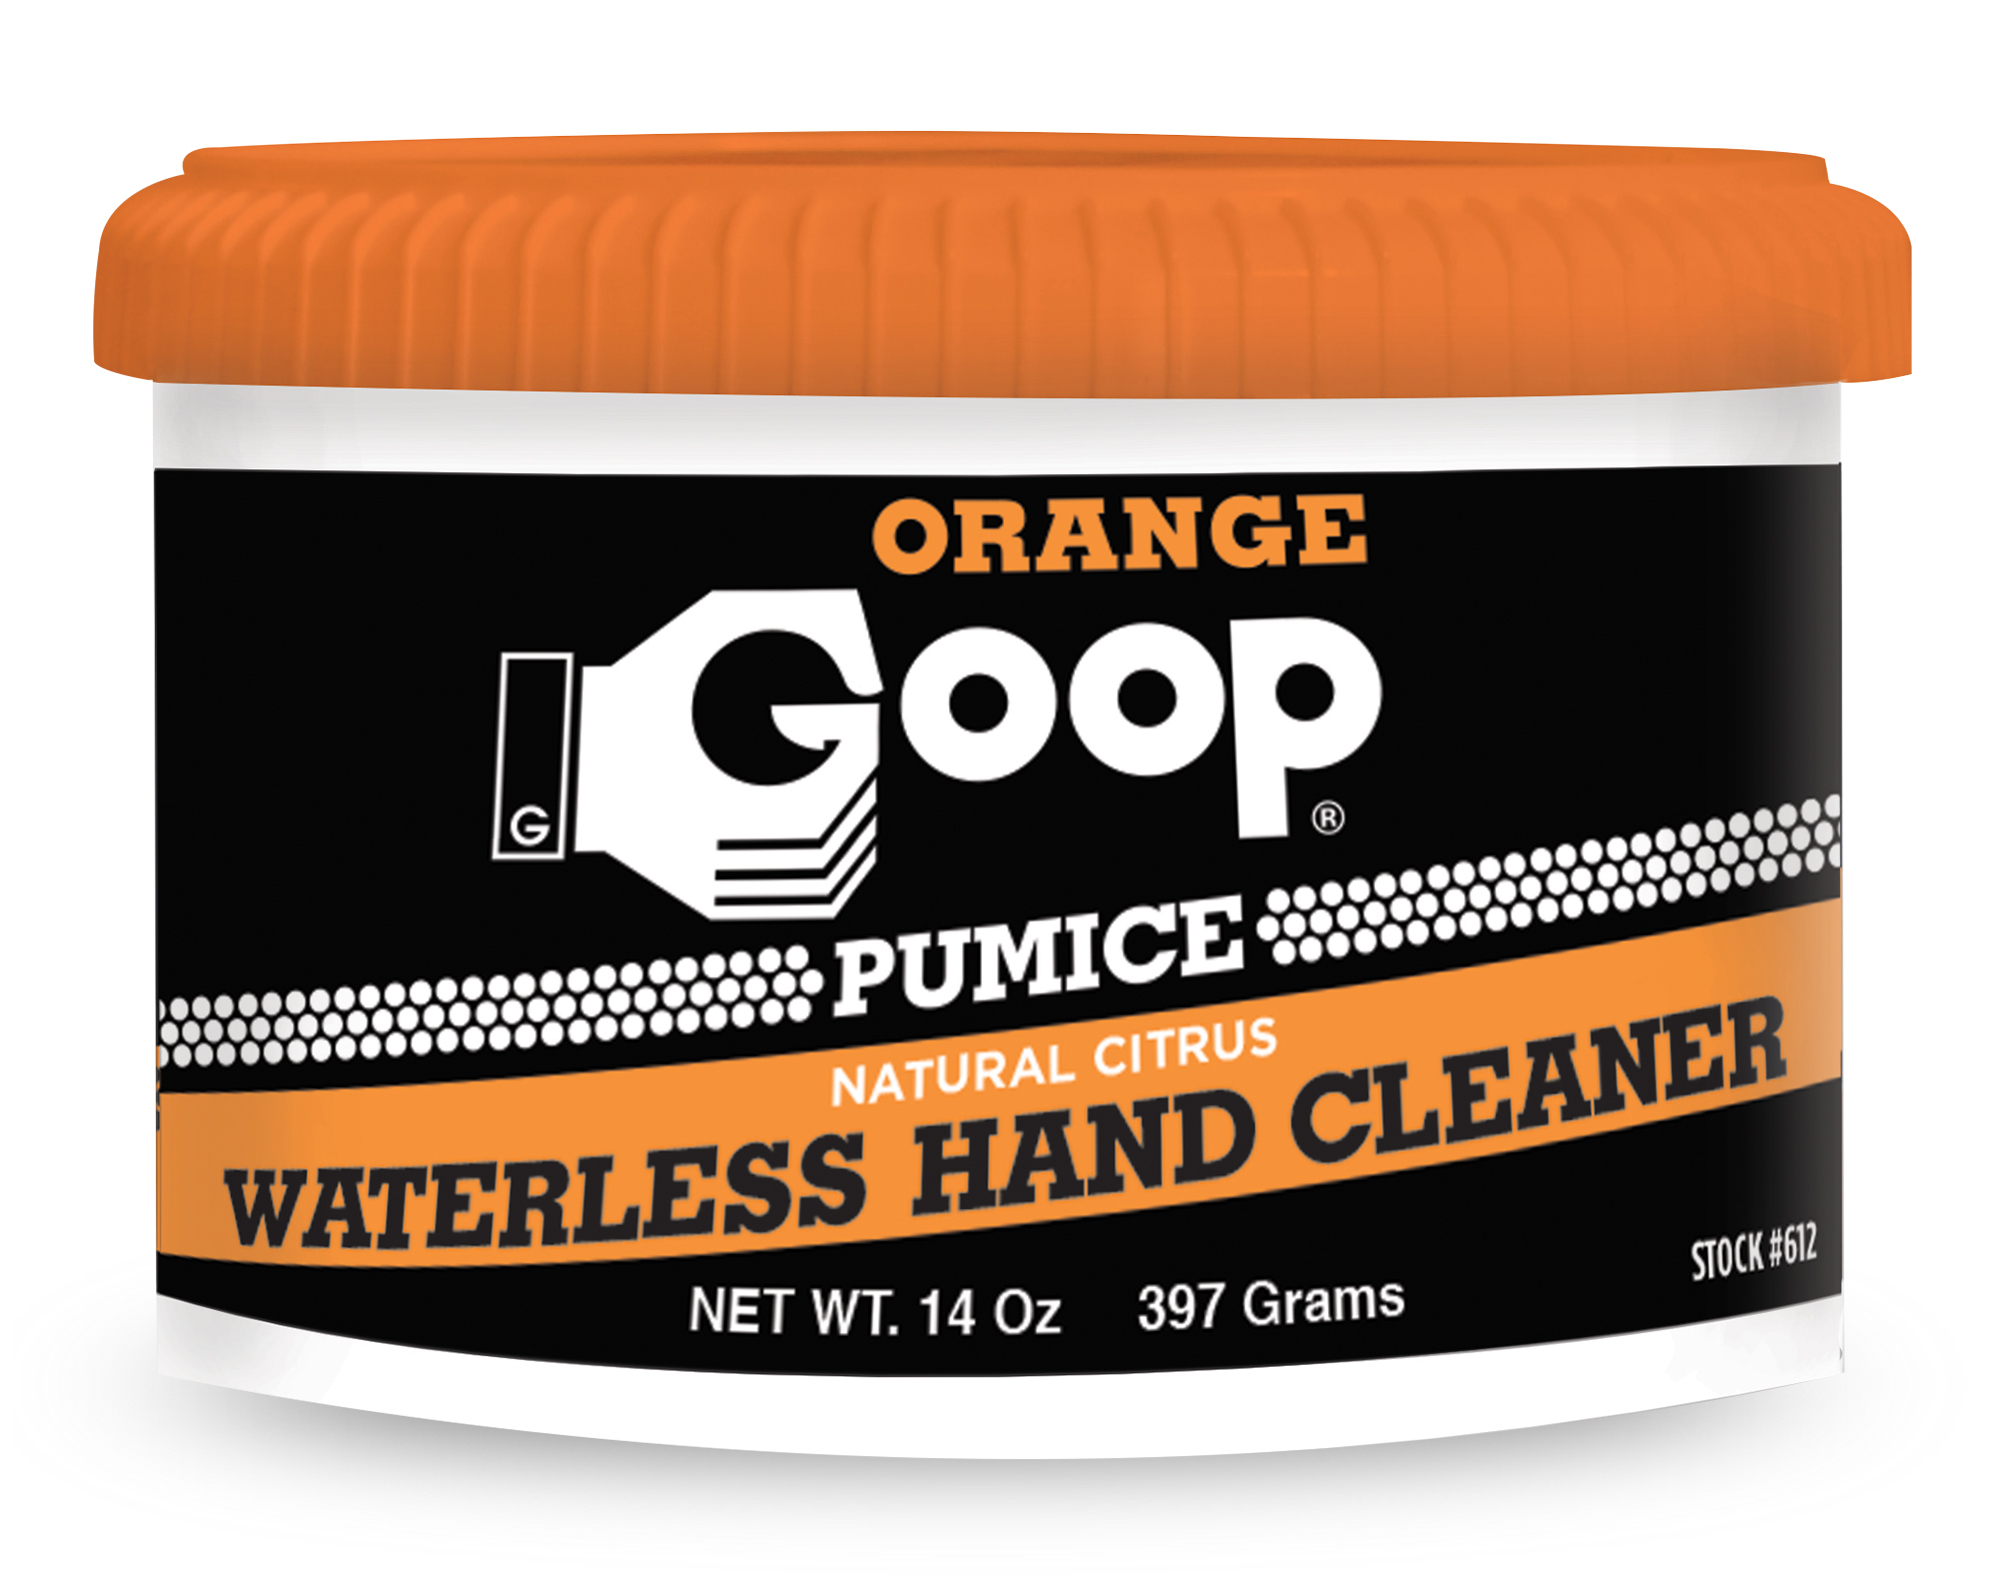 Goop Multipurpose Hand Cleaner - 14 oz jar